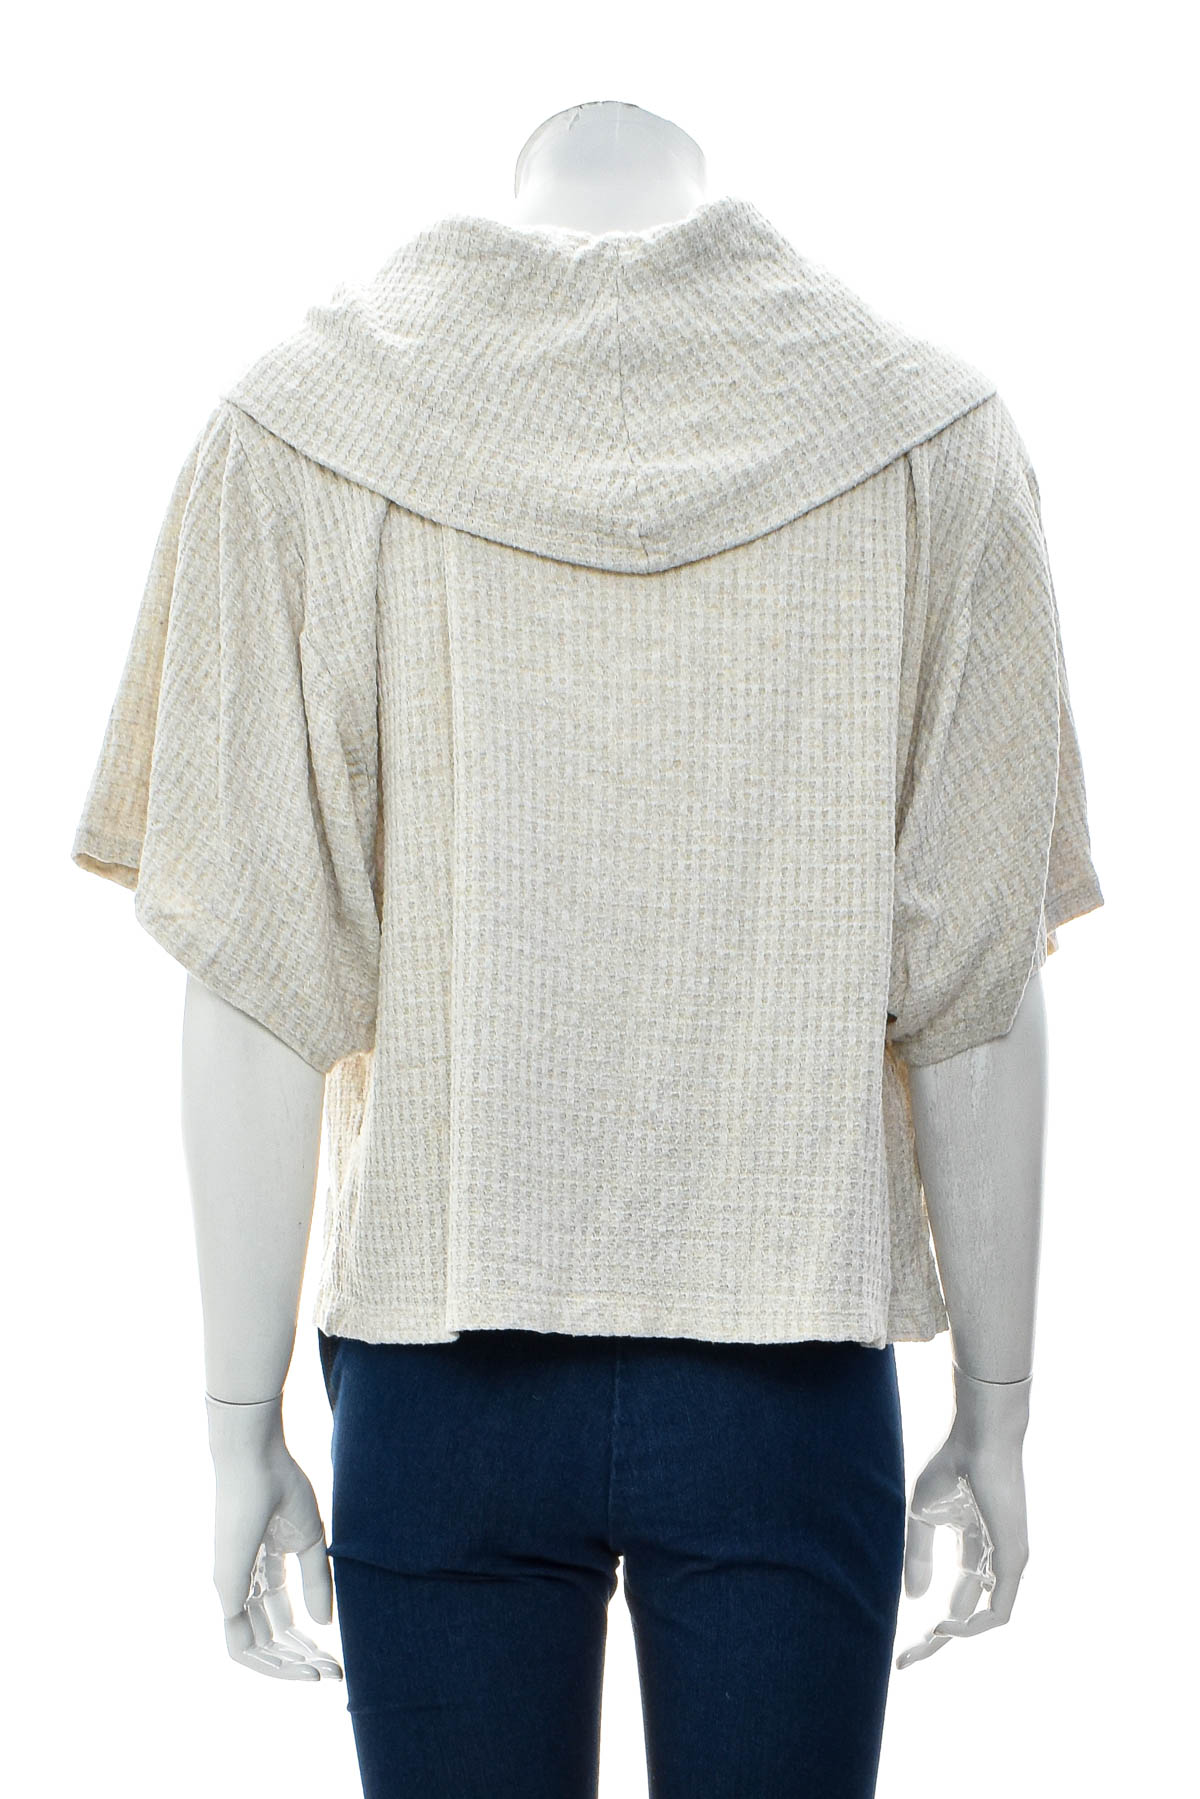 Women's sweater - Yarn & Sea - 1